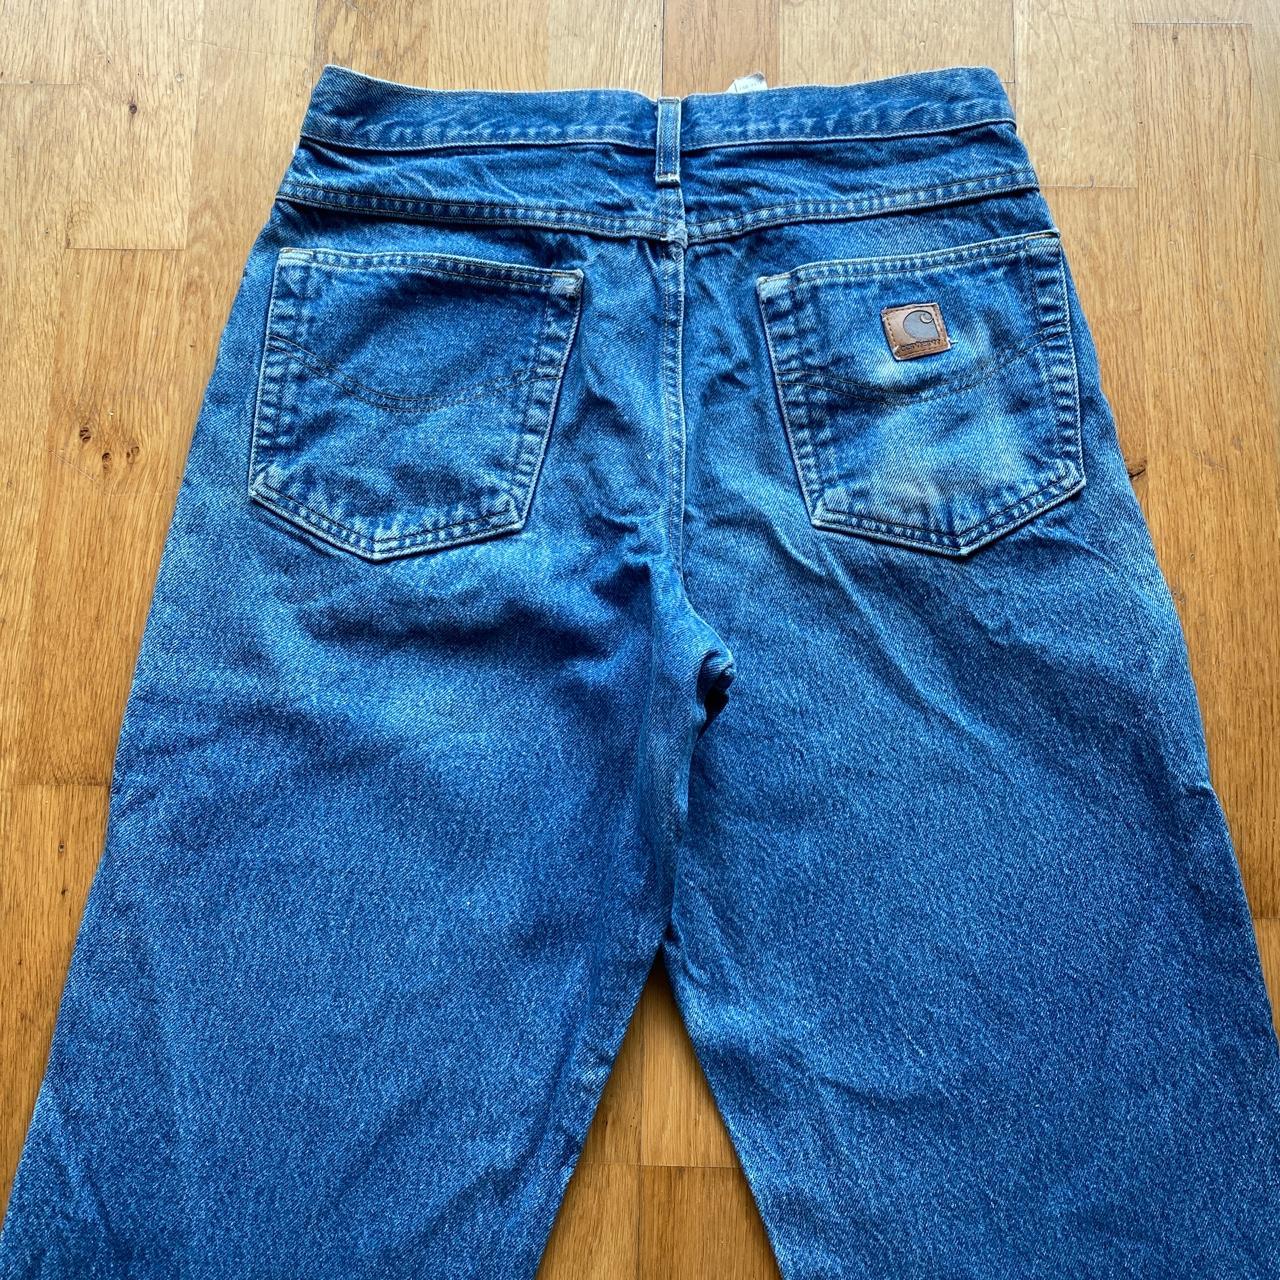 Vintage Blue carhartt denim jeans. Staple jeans in... - Depop